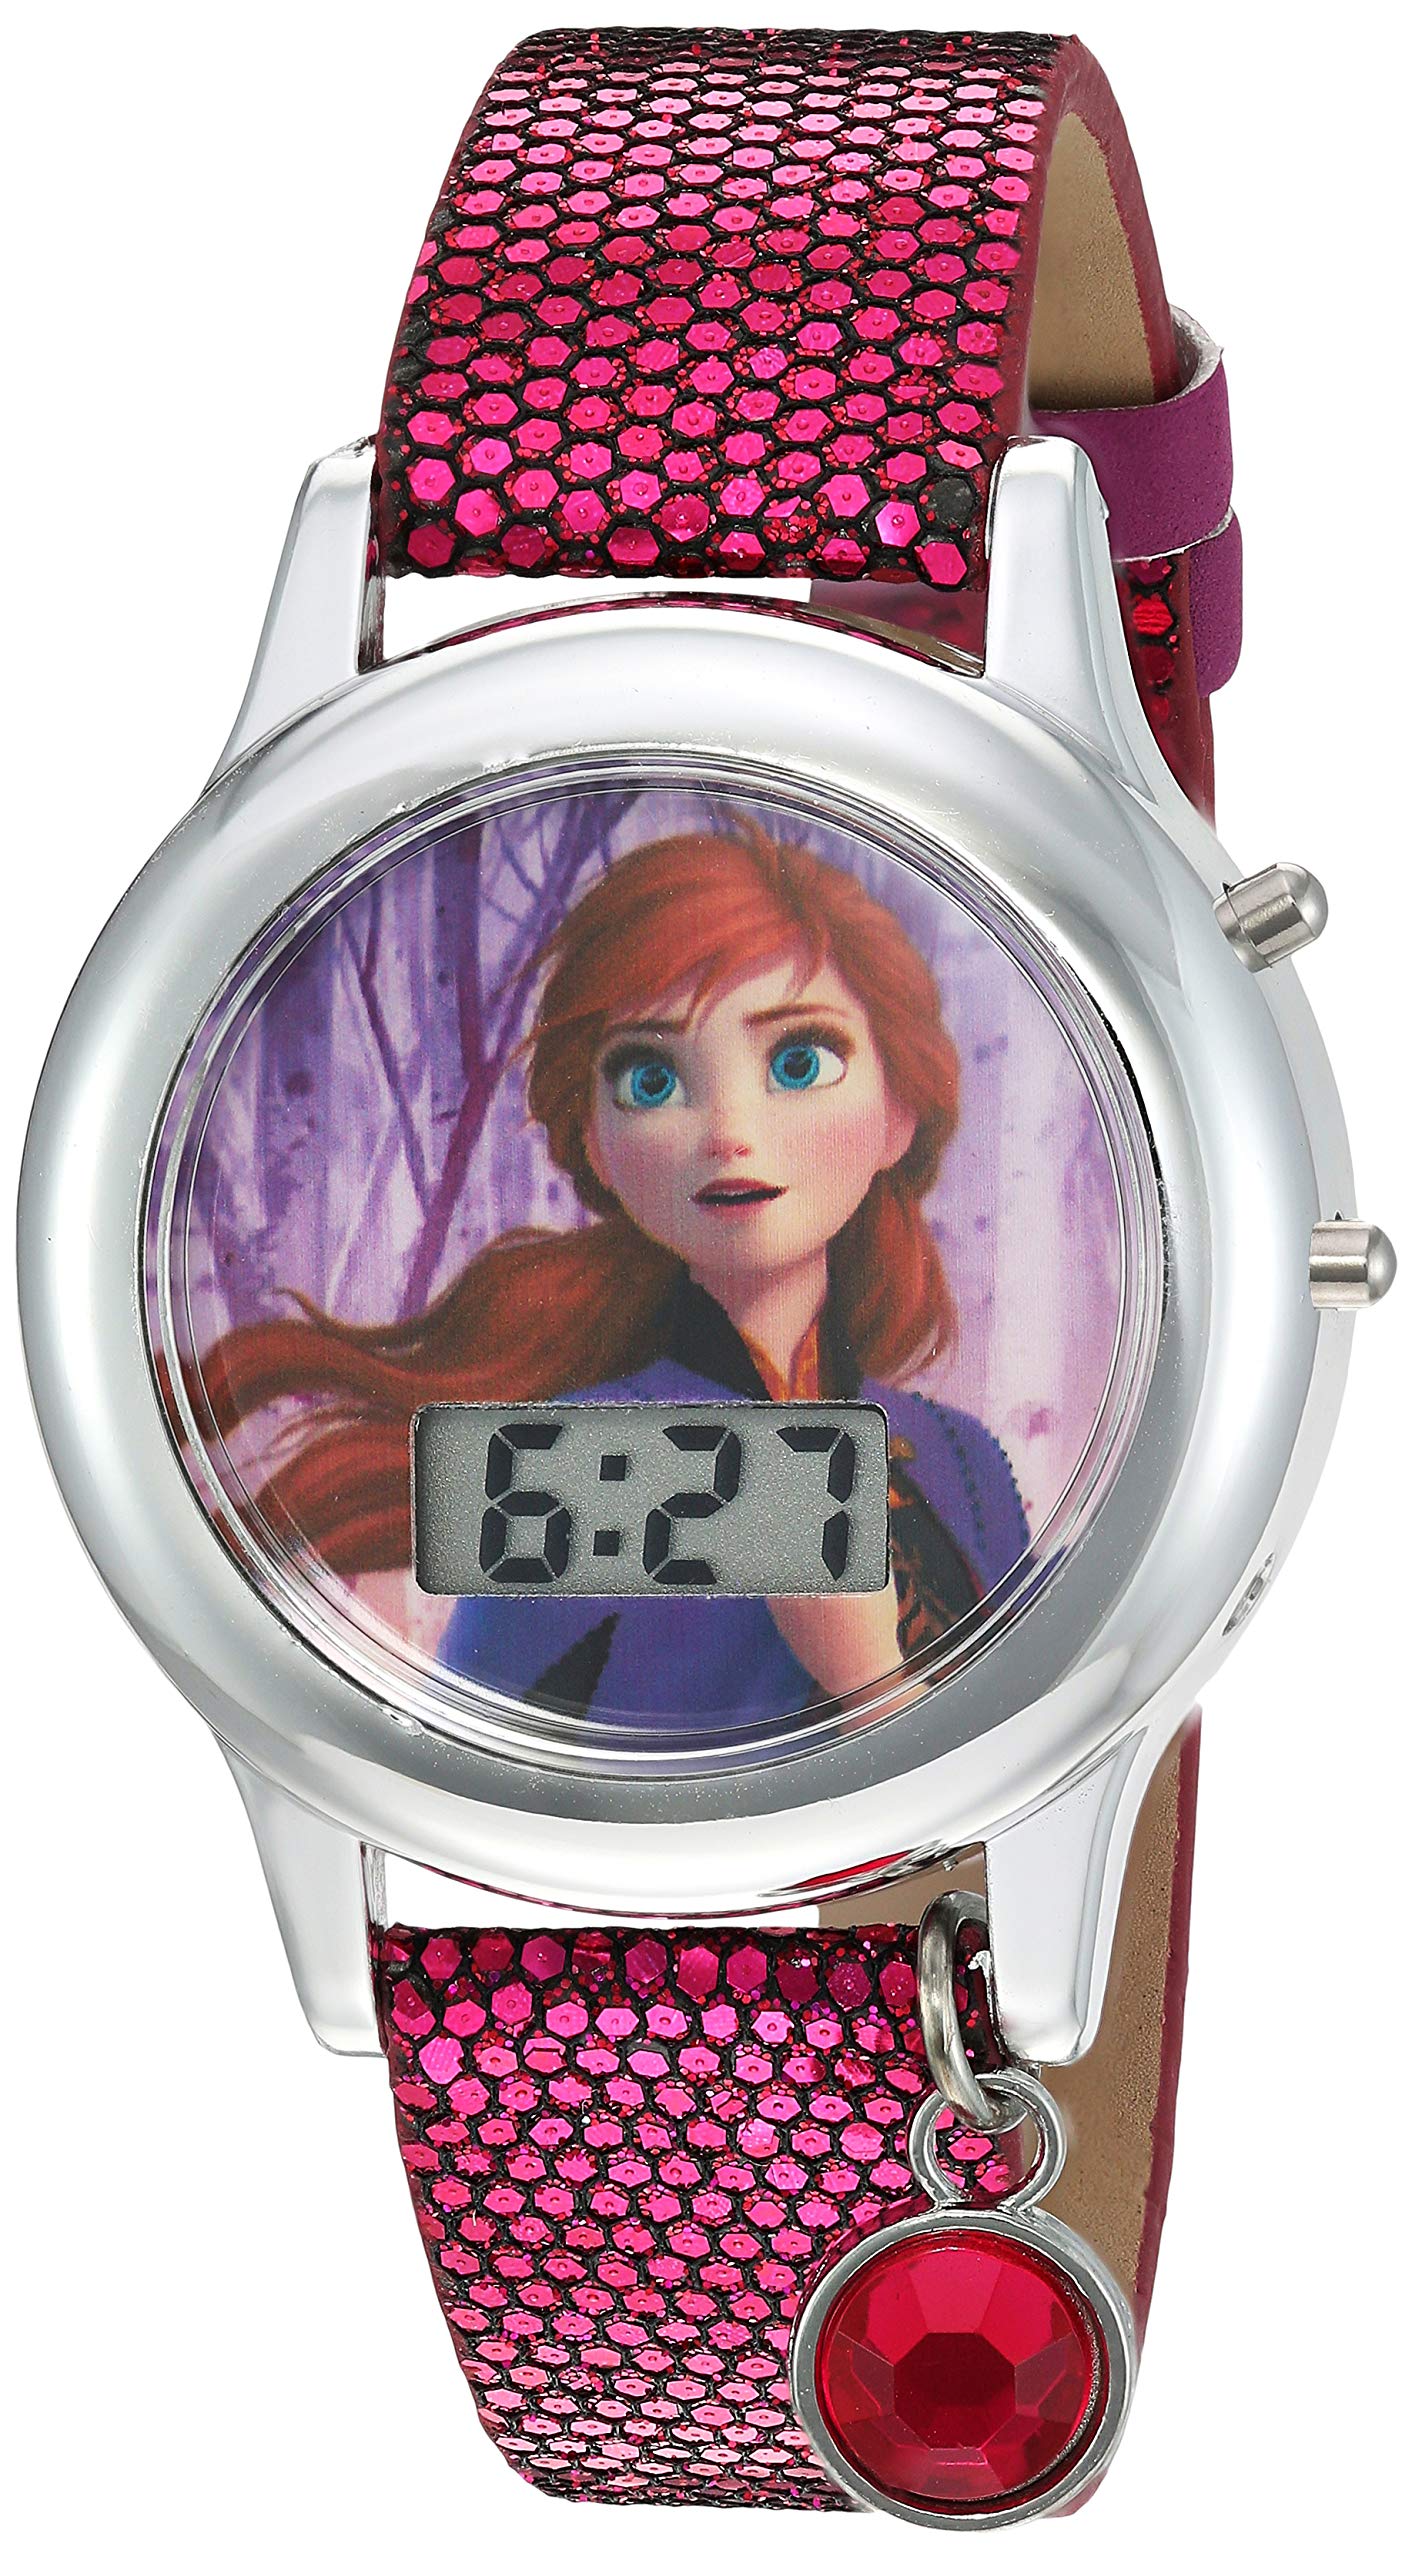 Accutime Frozen 2 Kid's Watch